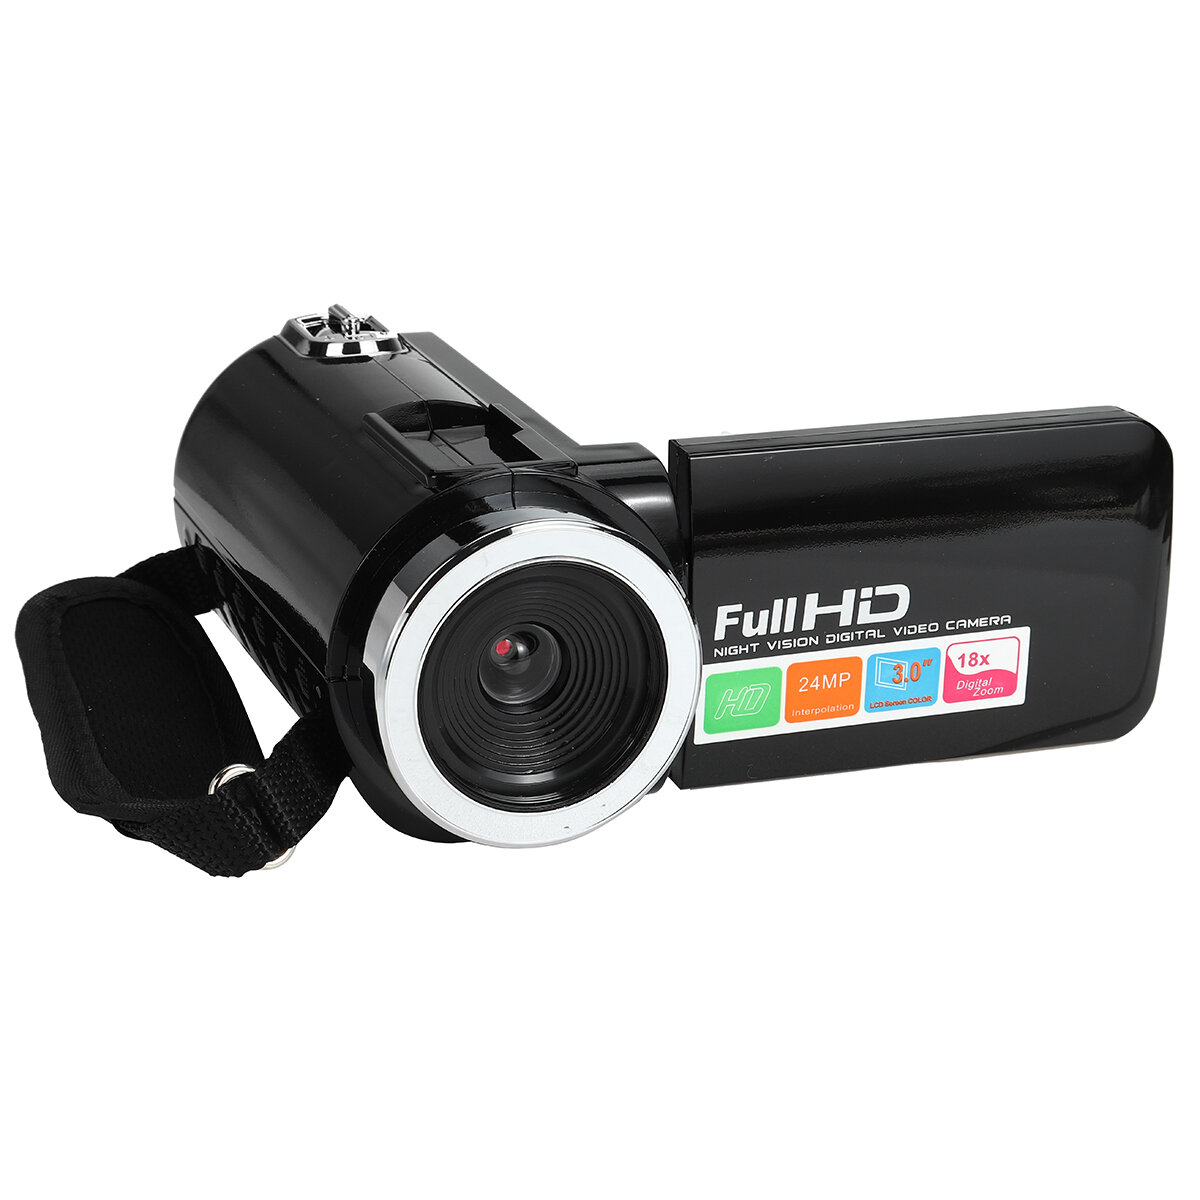 

24MP 18x Zoom 1080P HD Видеокамера камера Сенсорный экран Цифровое видео камера DV TF карта